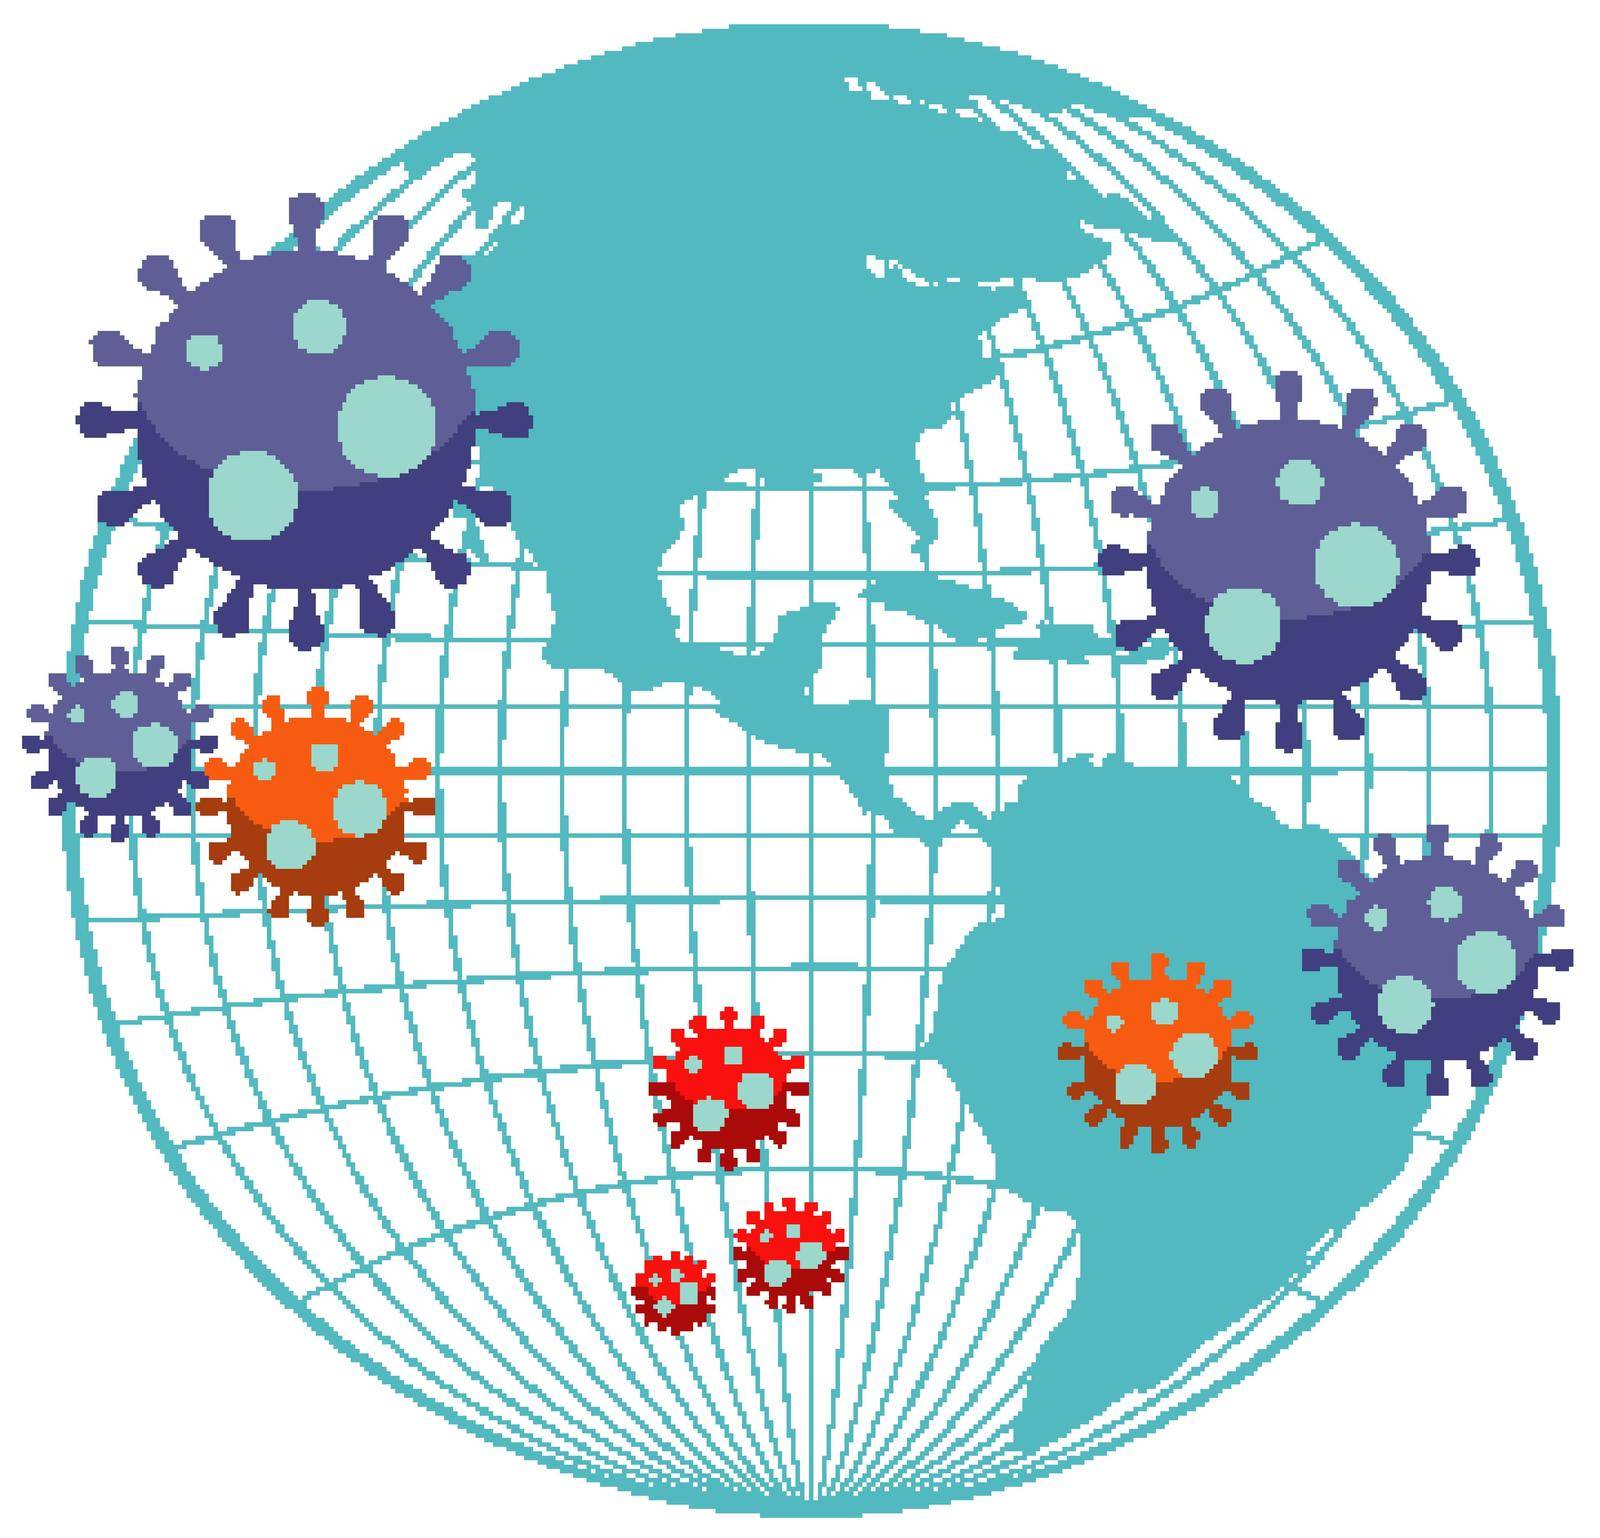 Coronavirus icon with earth globe icon illustration